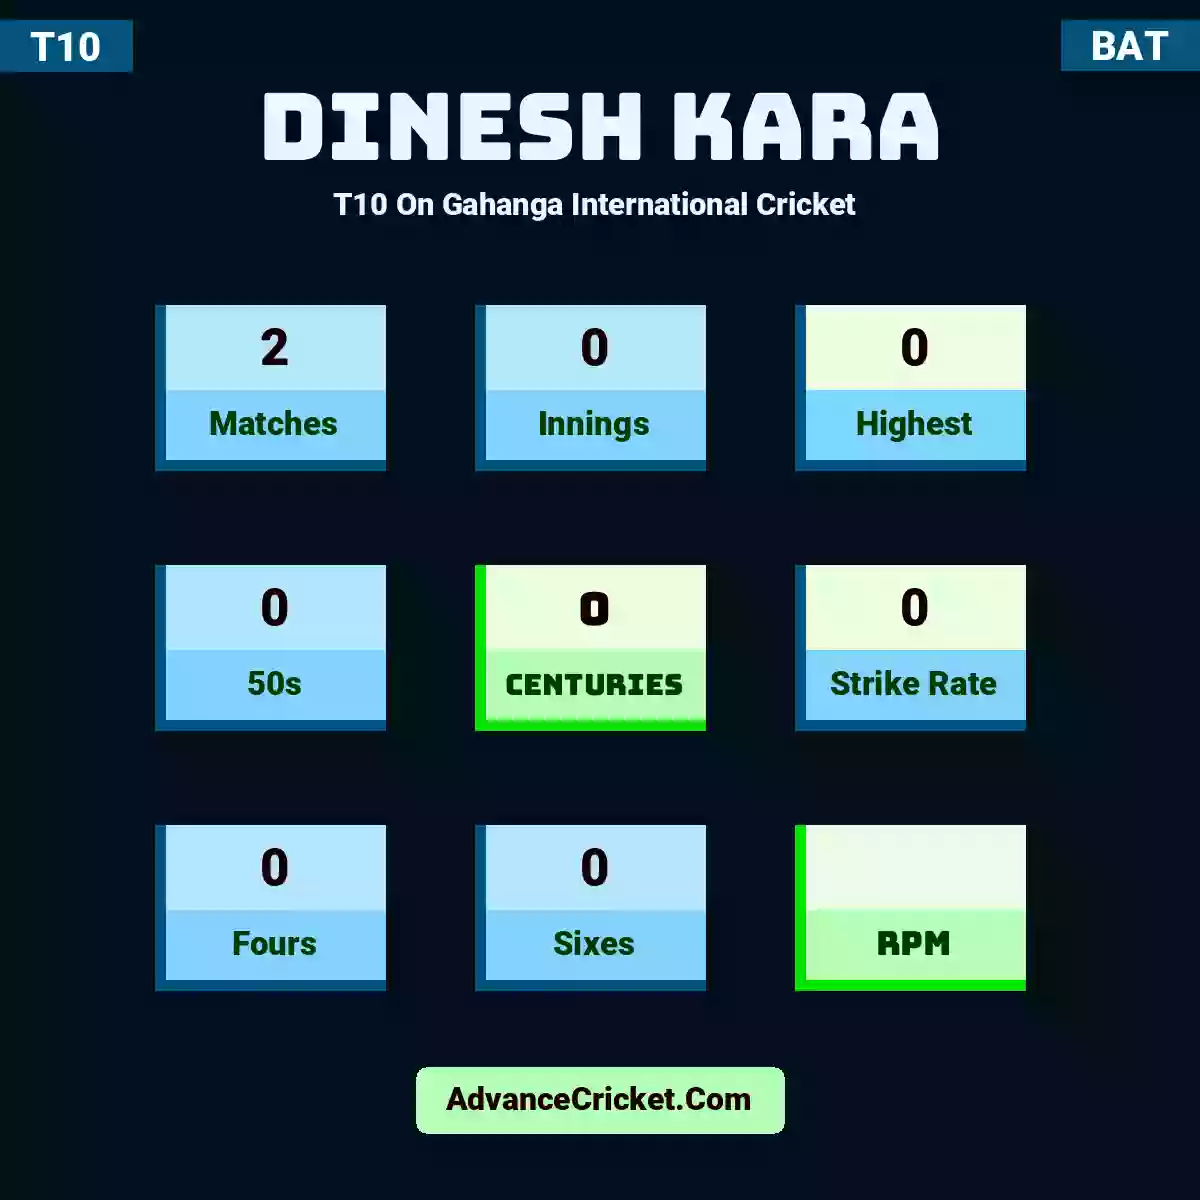 Dinesh Kara T10  On Gahanga International Cricket , Dinesh Kara played 2 matches, scored 0 runs as highest, 0 half-centuries, and 0 centuries, with a strike rate of 0. D.Kara hit 0 fours and 0 sixes.